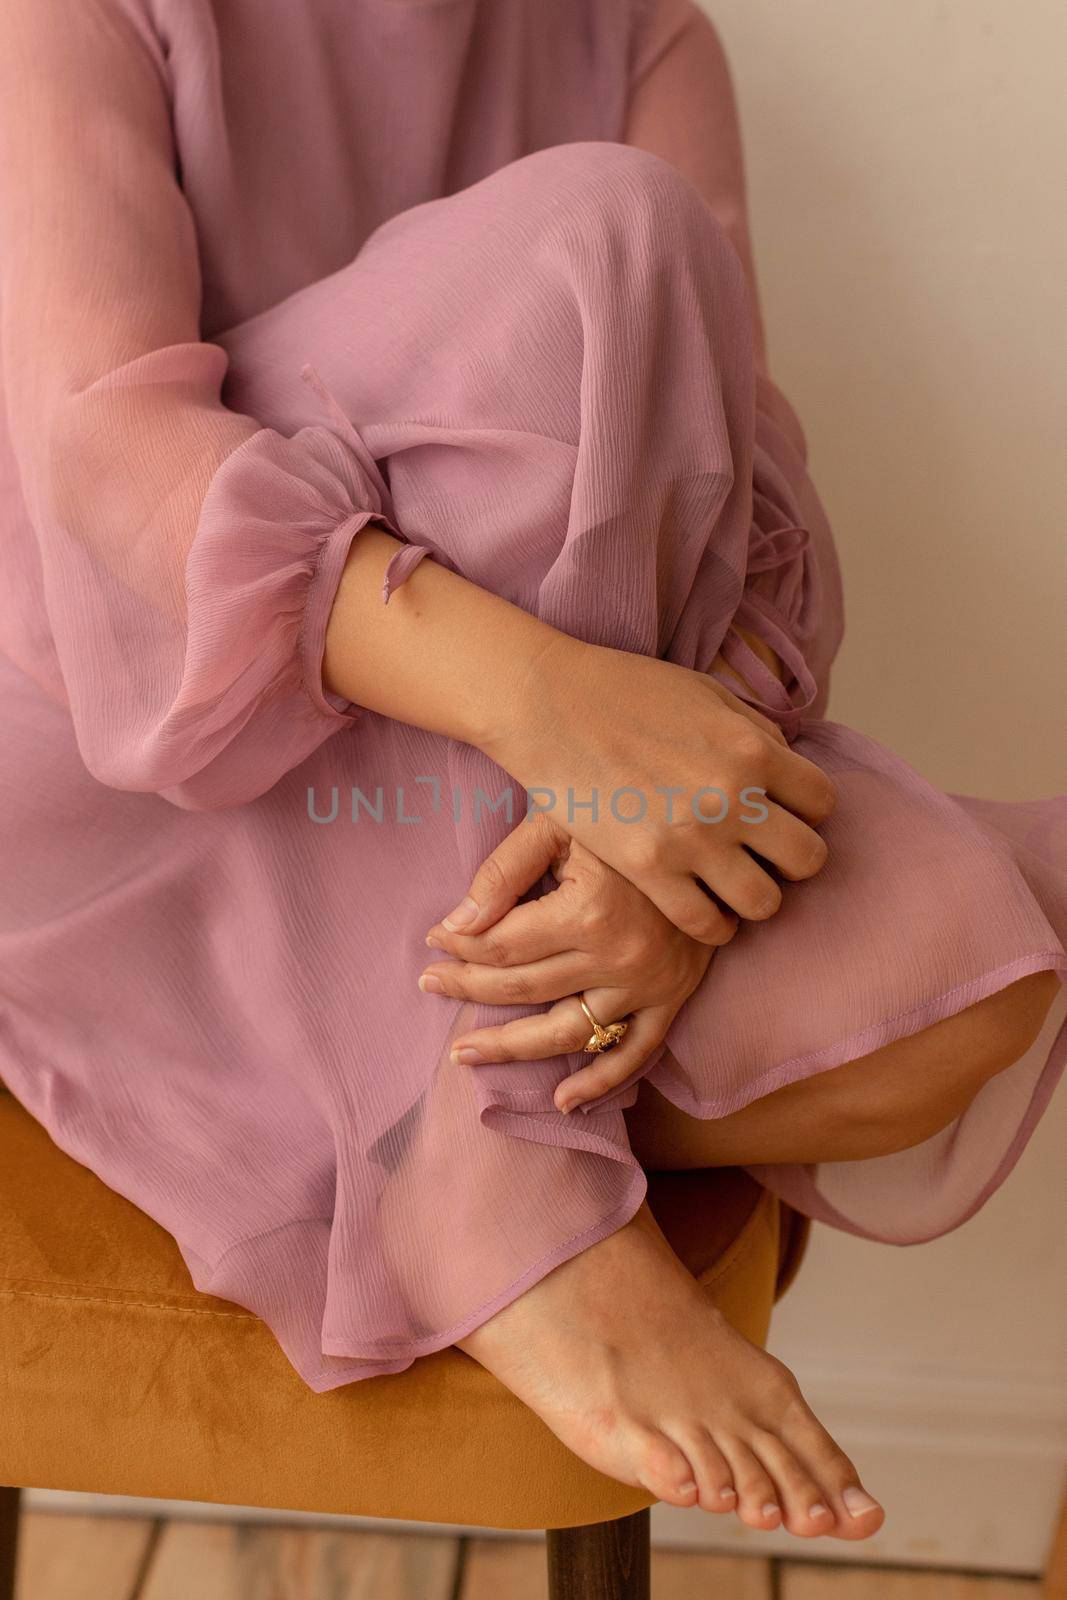 Crop woman in translucent dress embracing knee by Demkat